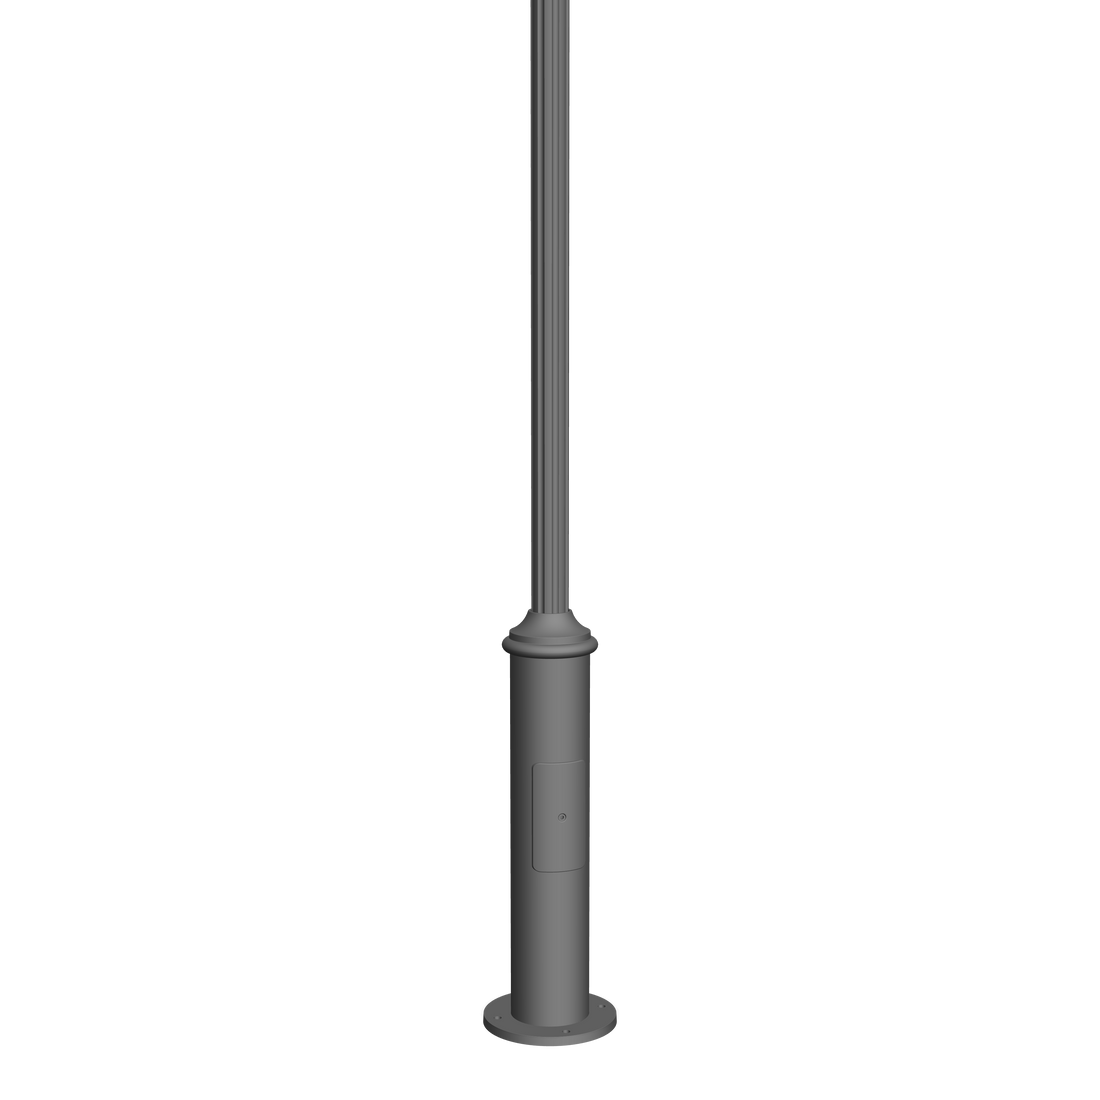 Commercial - 4 inch fluted aluminum post on muffler base [DA4F]